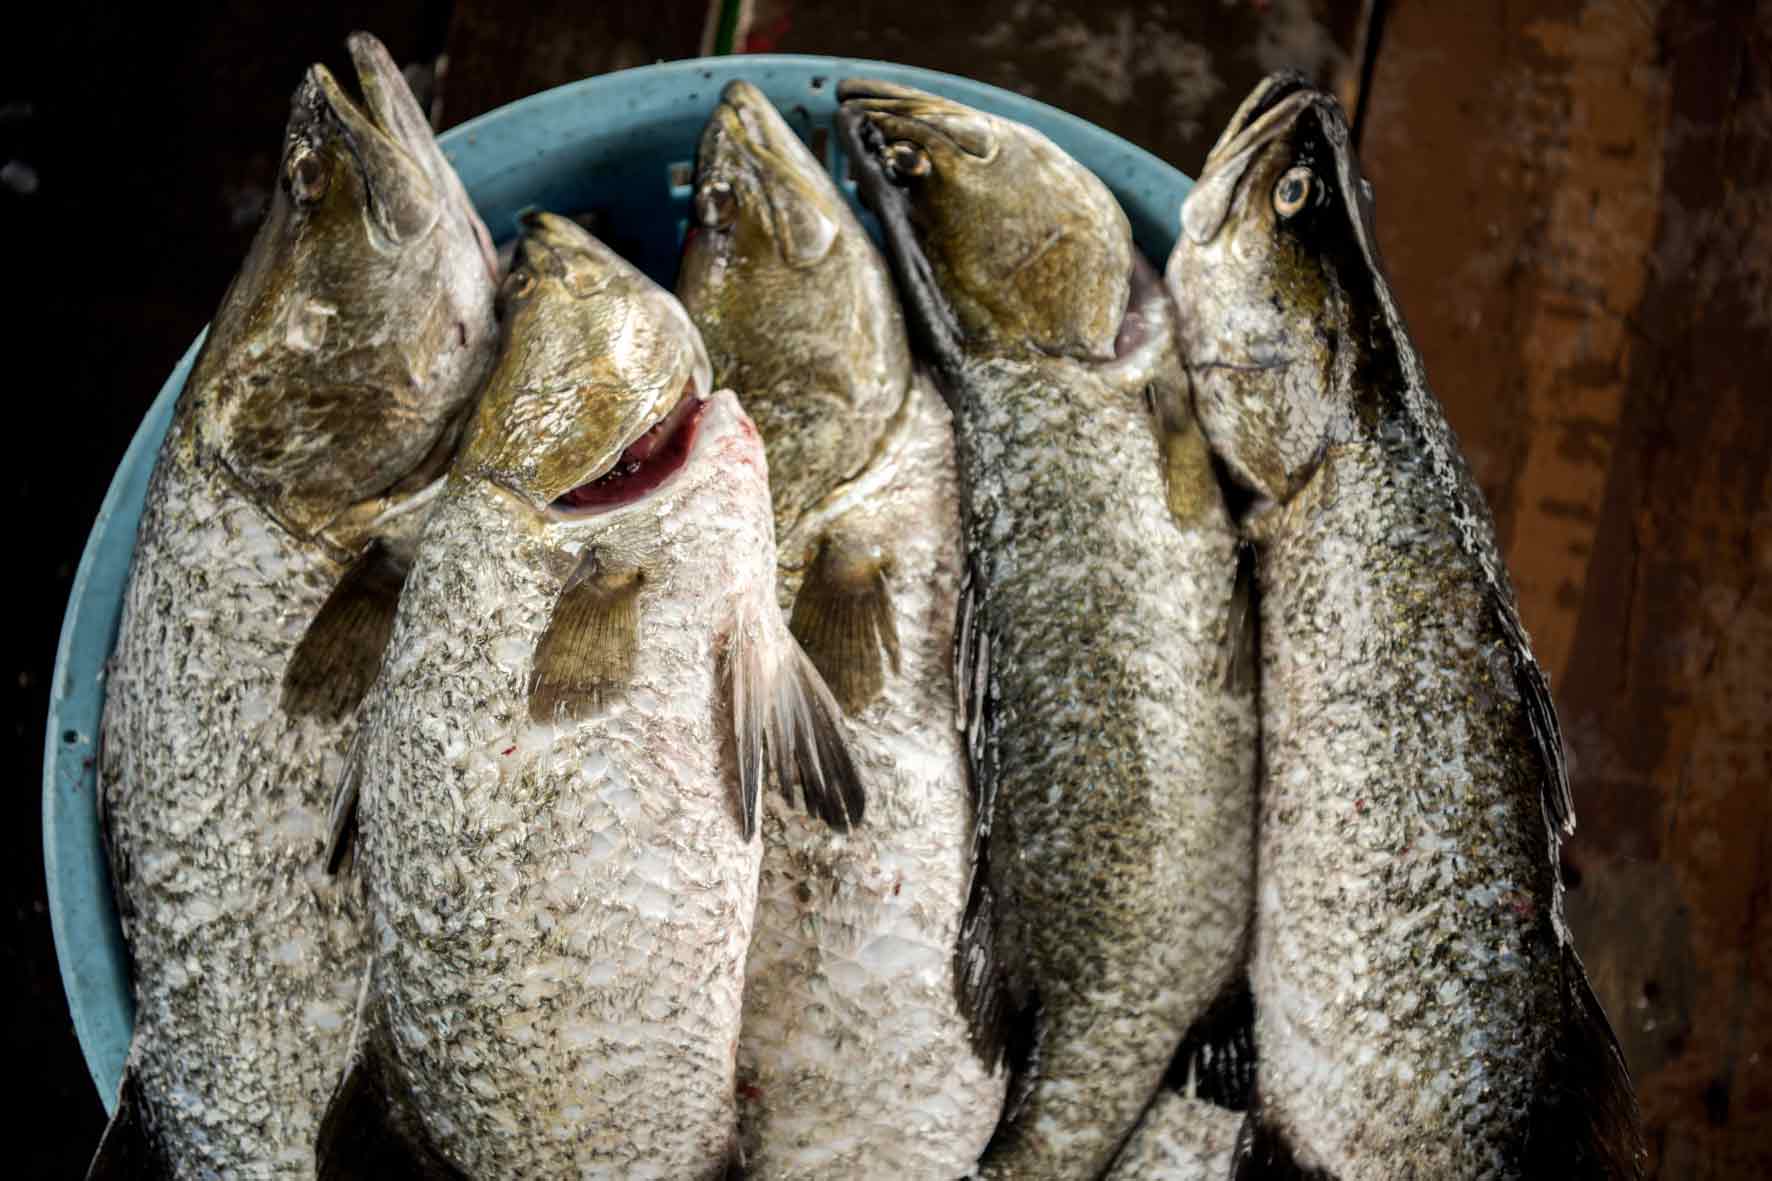 Sustainable fish farming